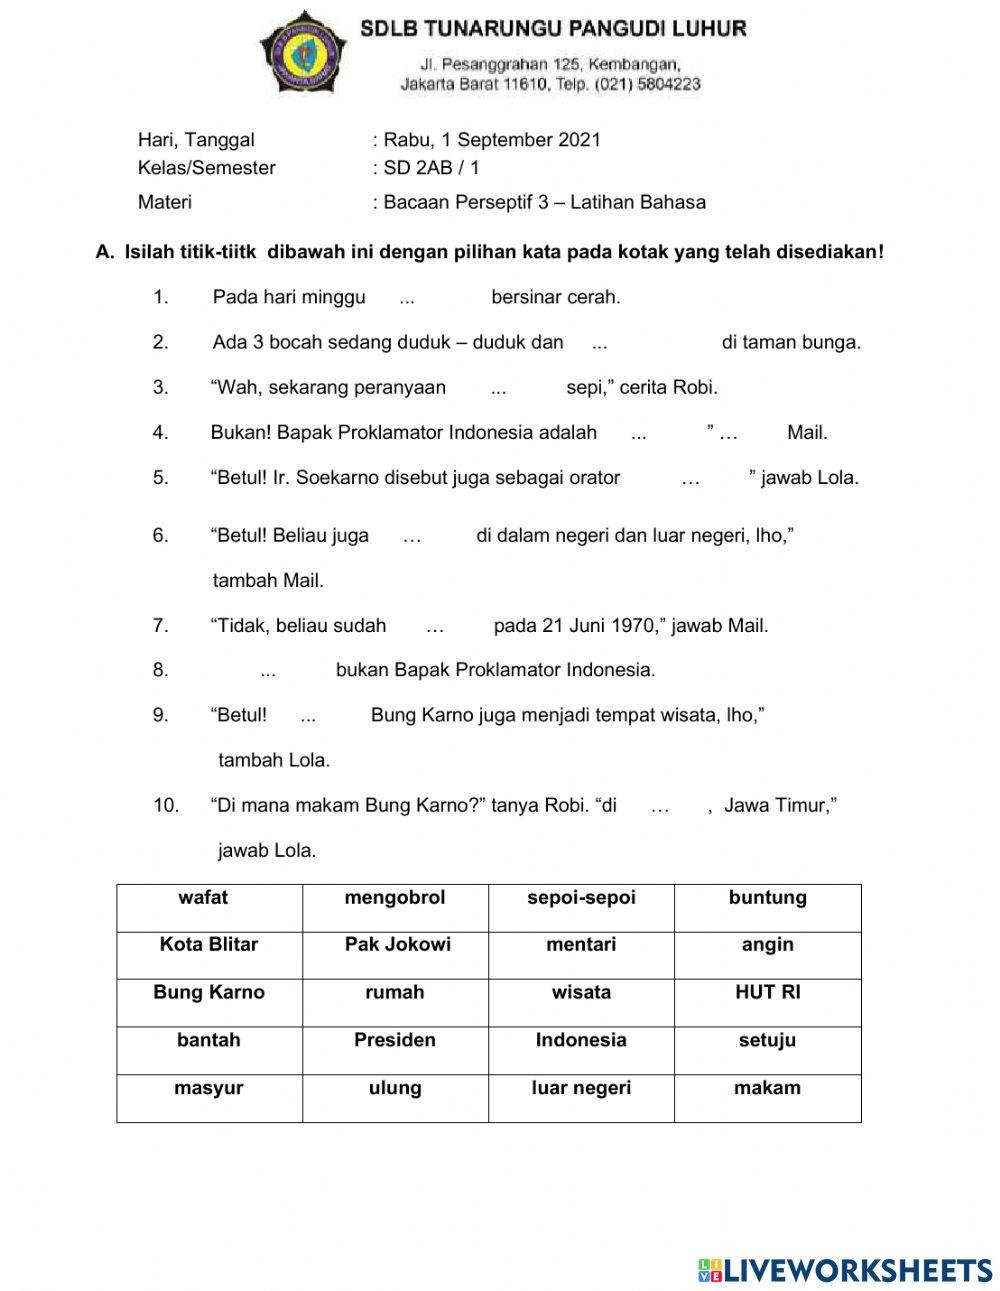 Latihan bahasa 2 bacaan -Bung karno- Rabu, 1 September 2021